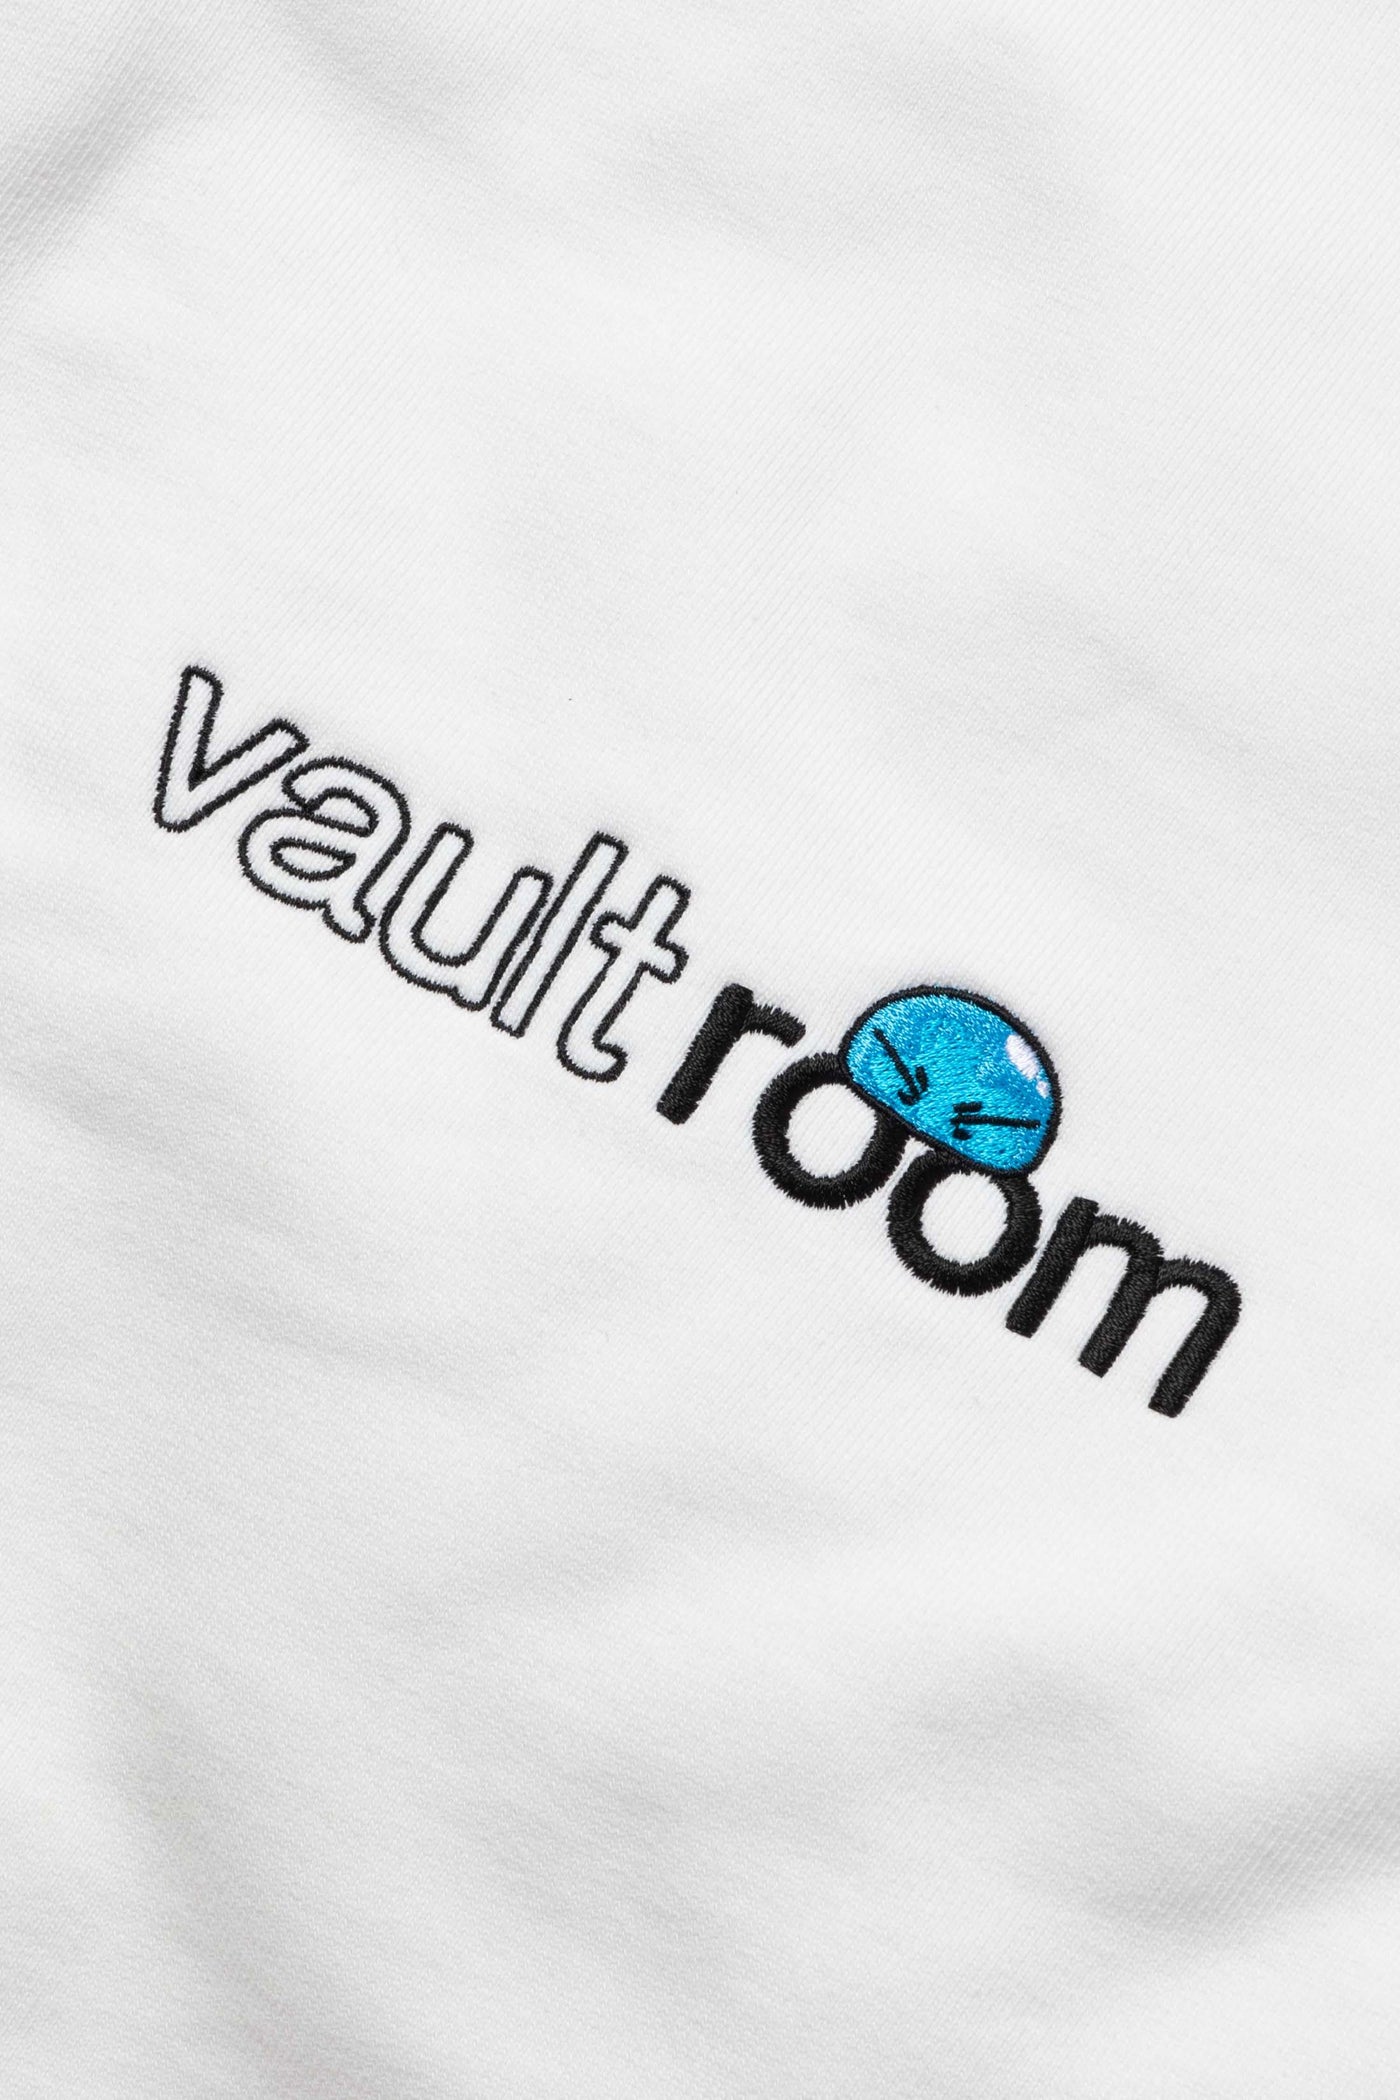 vaultroom×TENSURA HOODIE / WHT Mサイズ